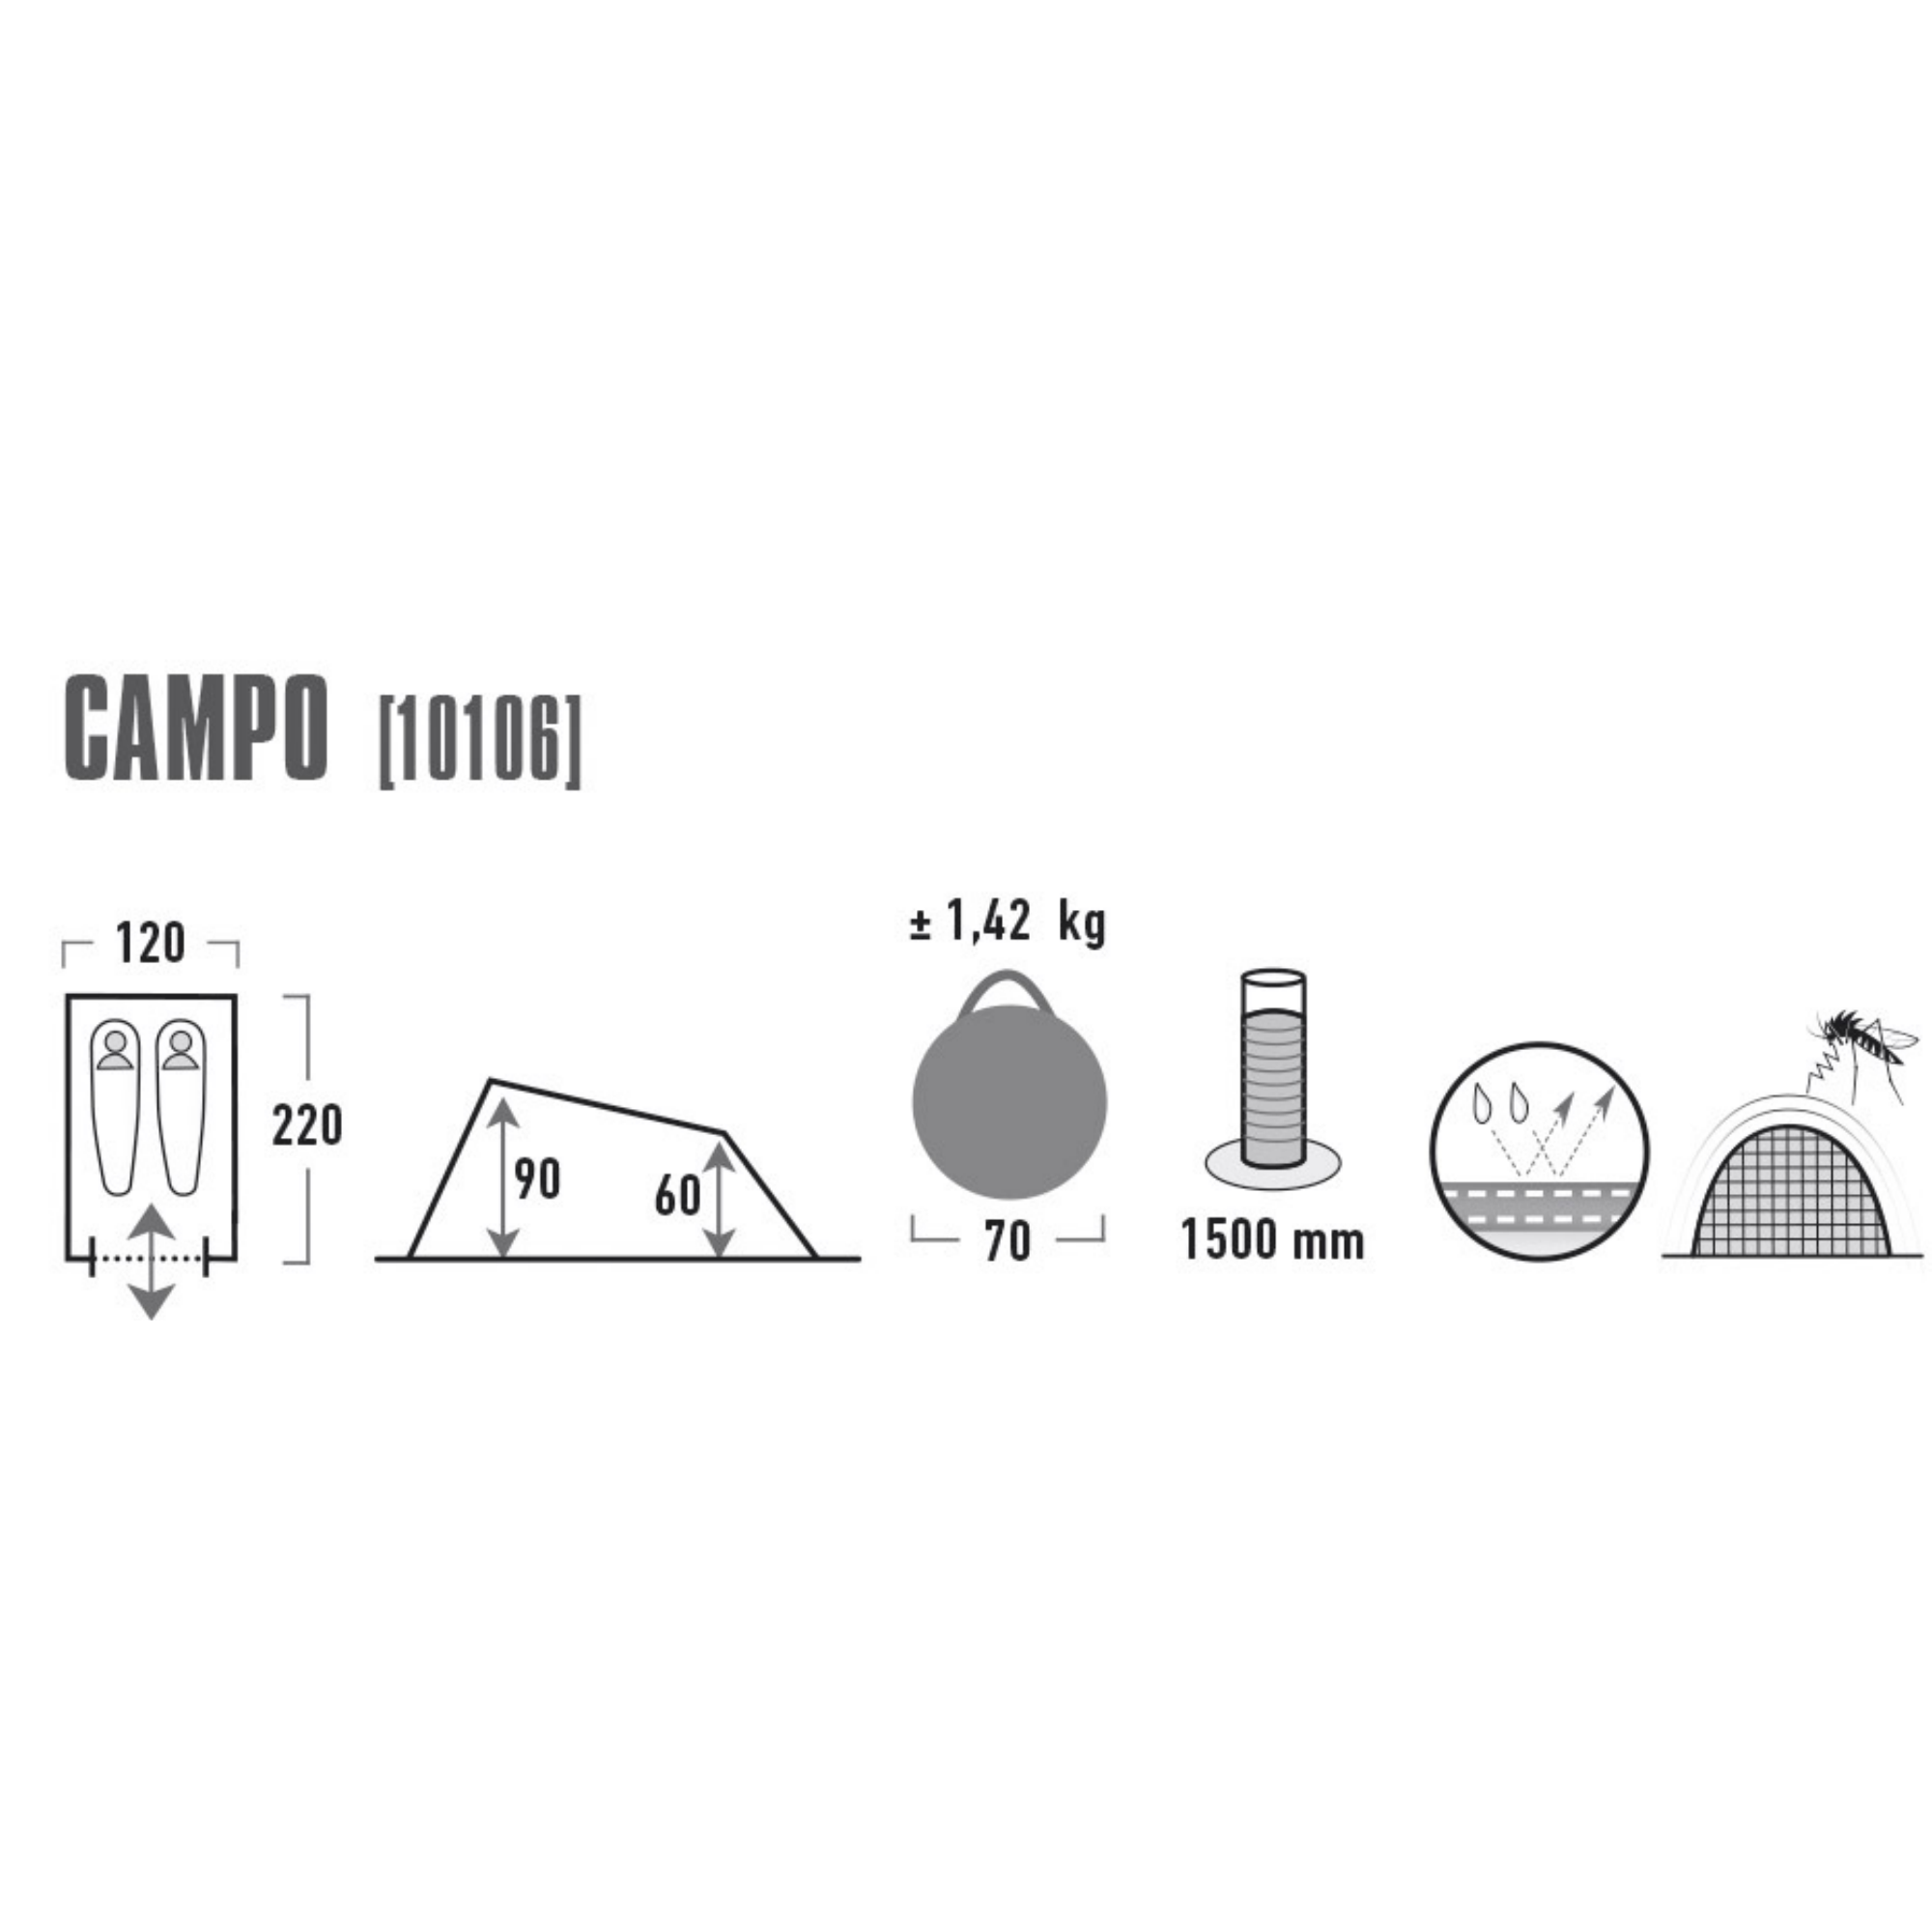 High Peak Pop-Up-Zelt 'Campo' 120 x 90 x 220 cm + product picture